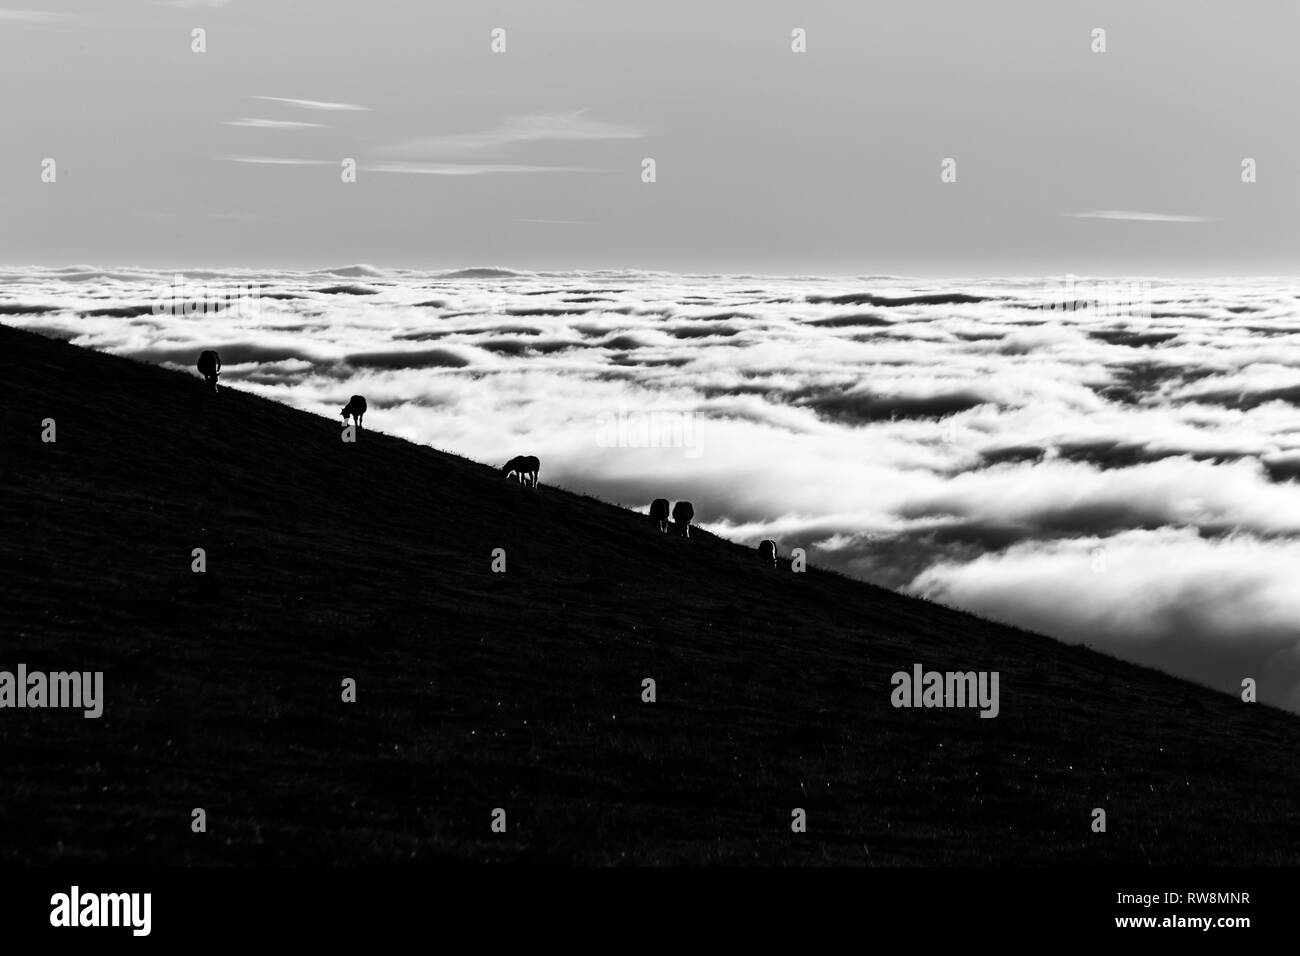 Horses silhouettes on a mountain over a sea of fog. Stock Photo